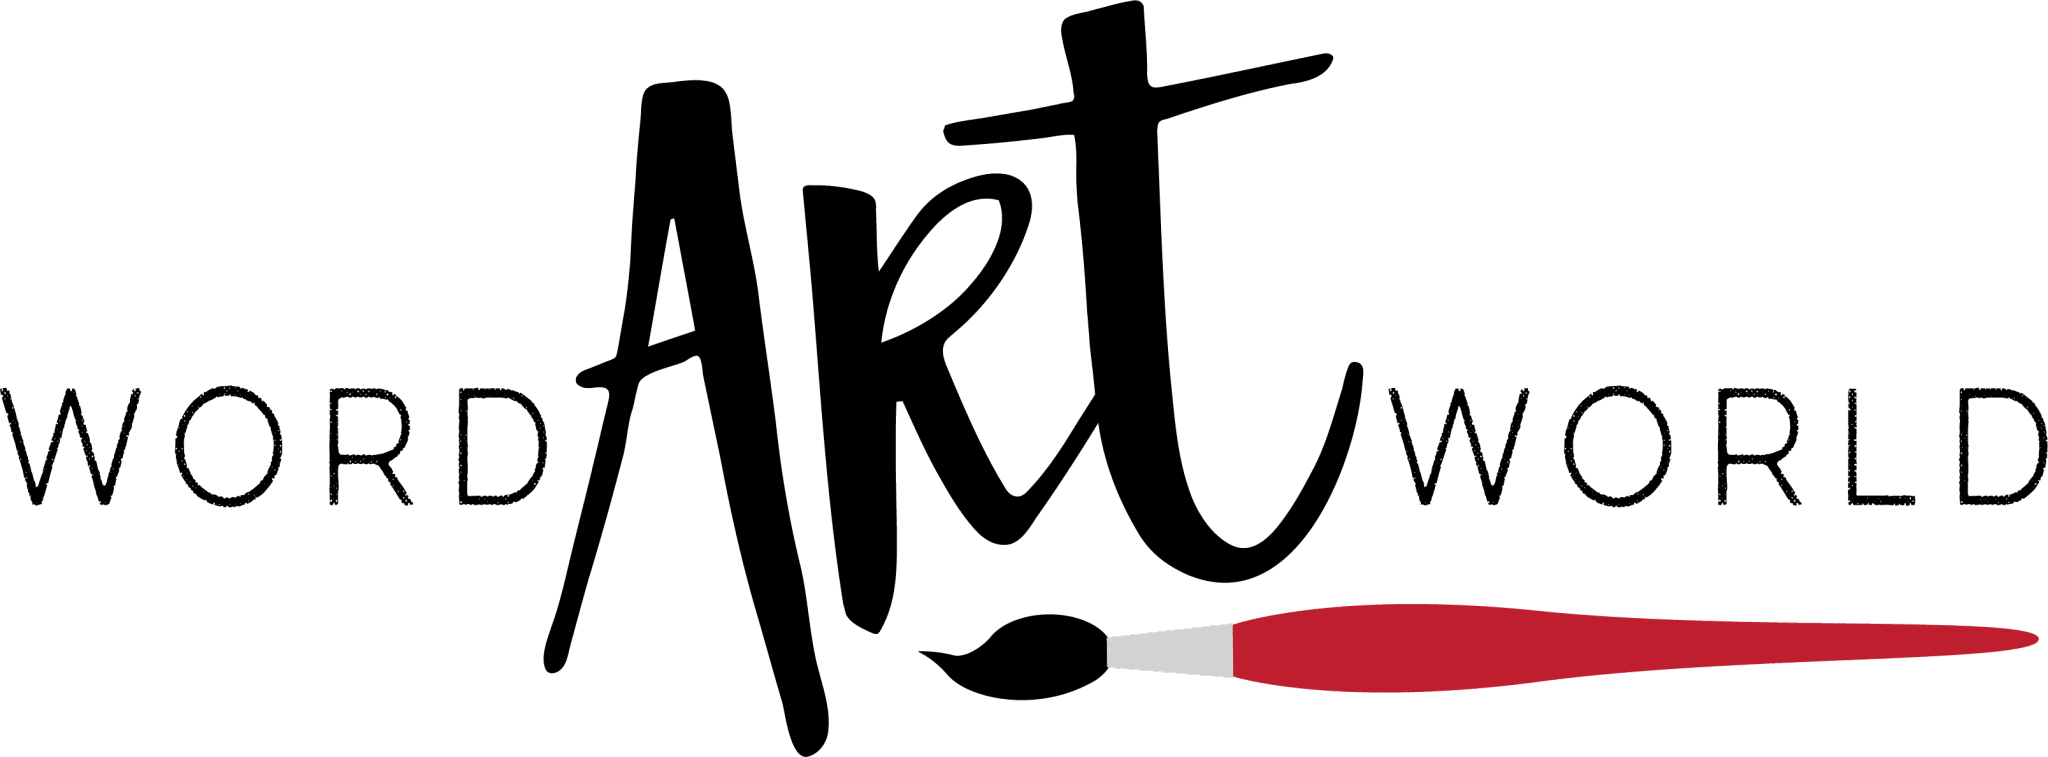 Word Art World Logo